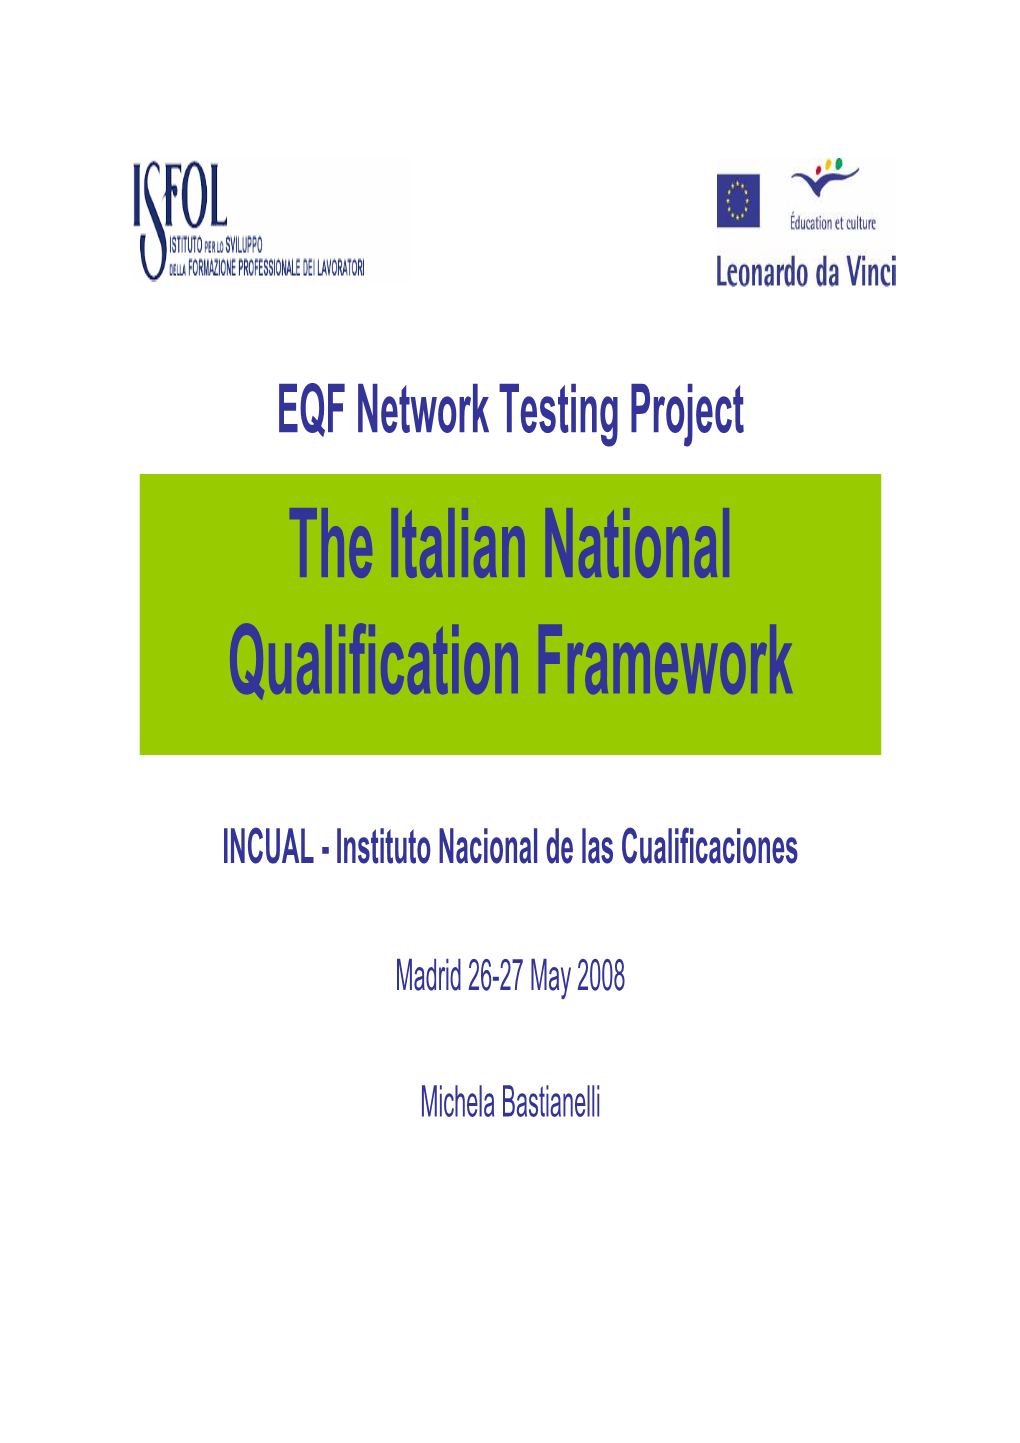 The Italian National Qualification Framework Michela